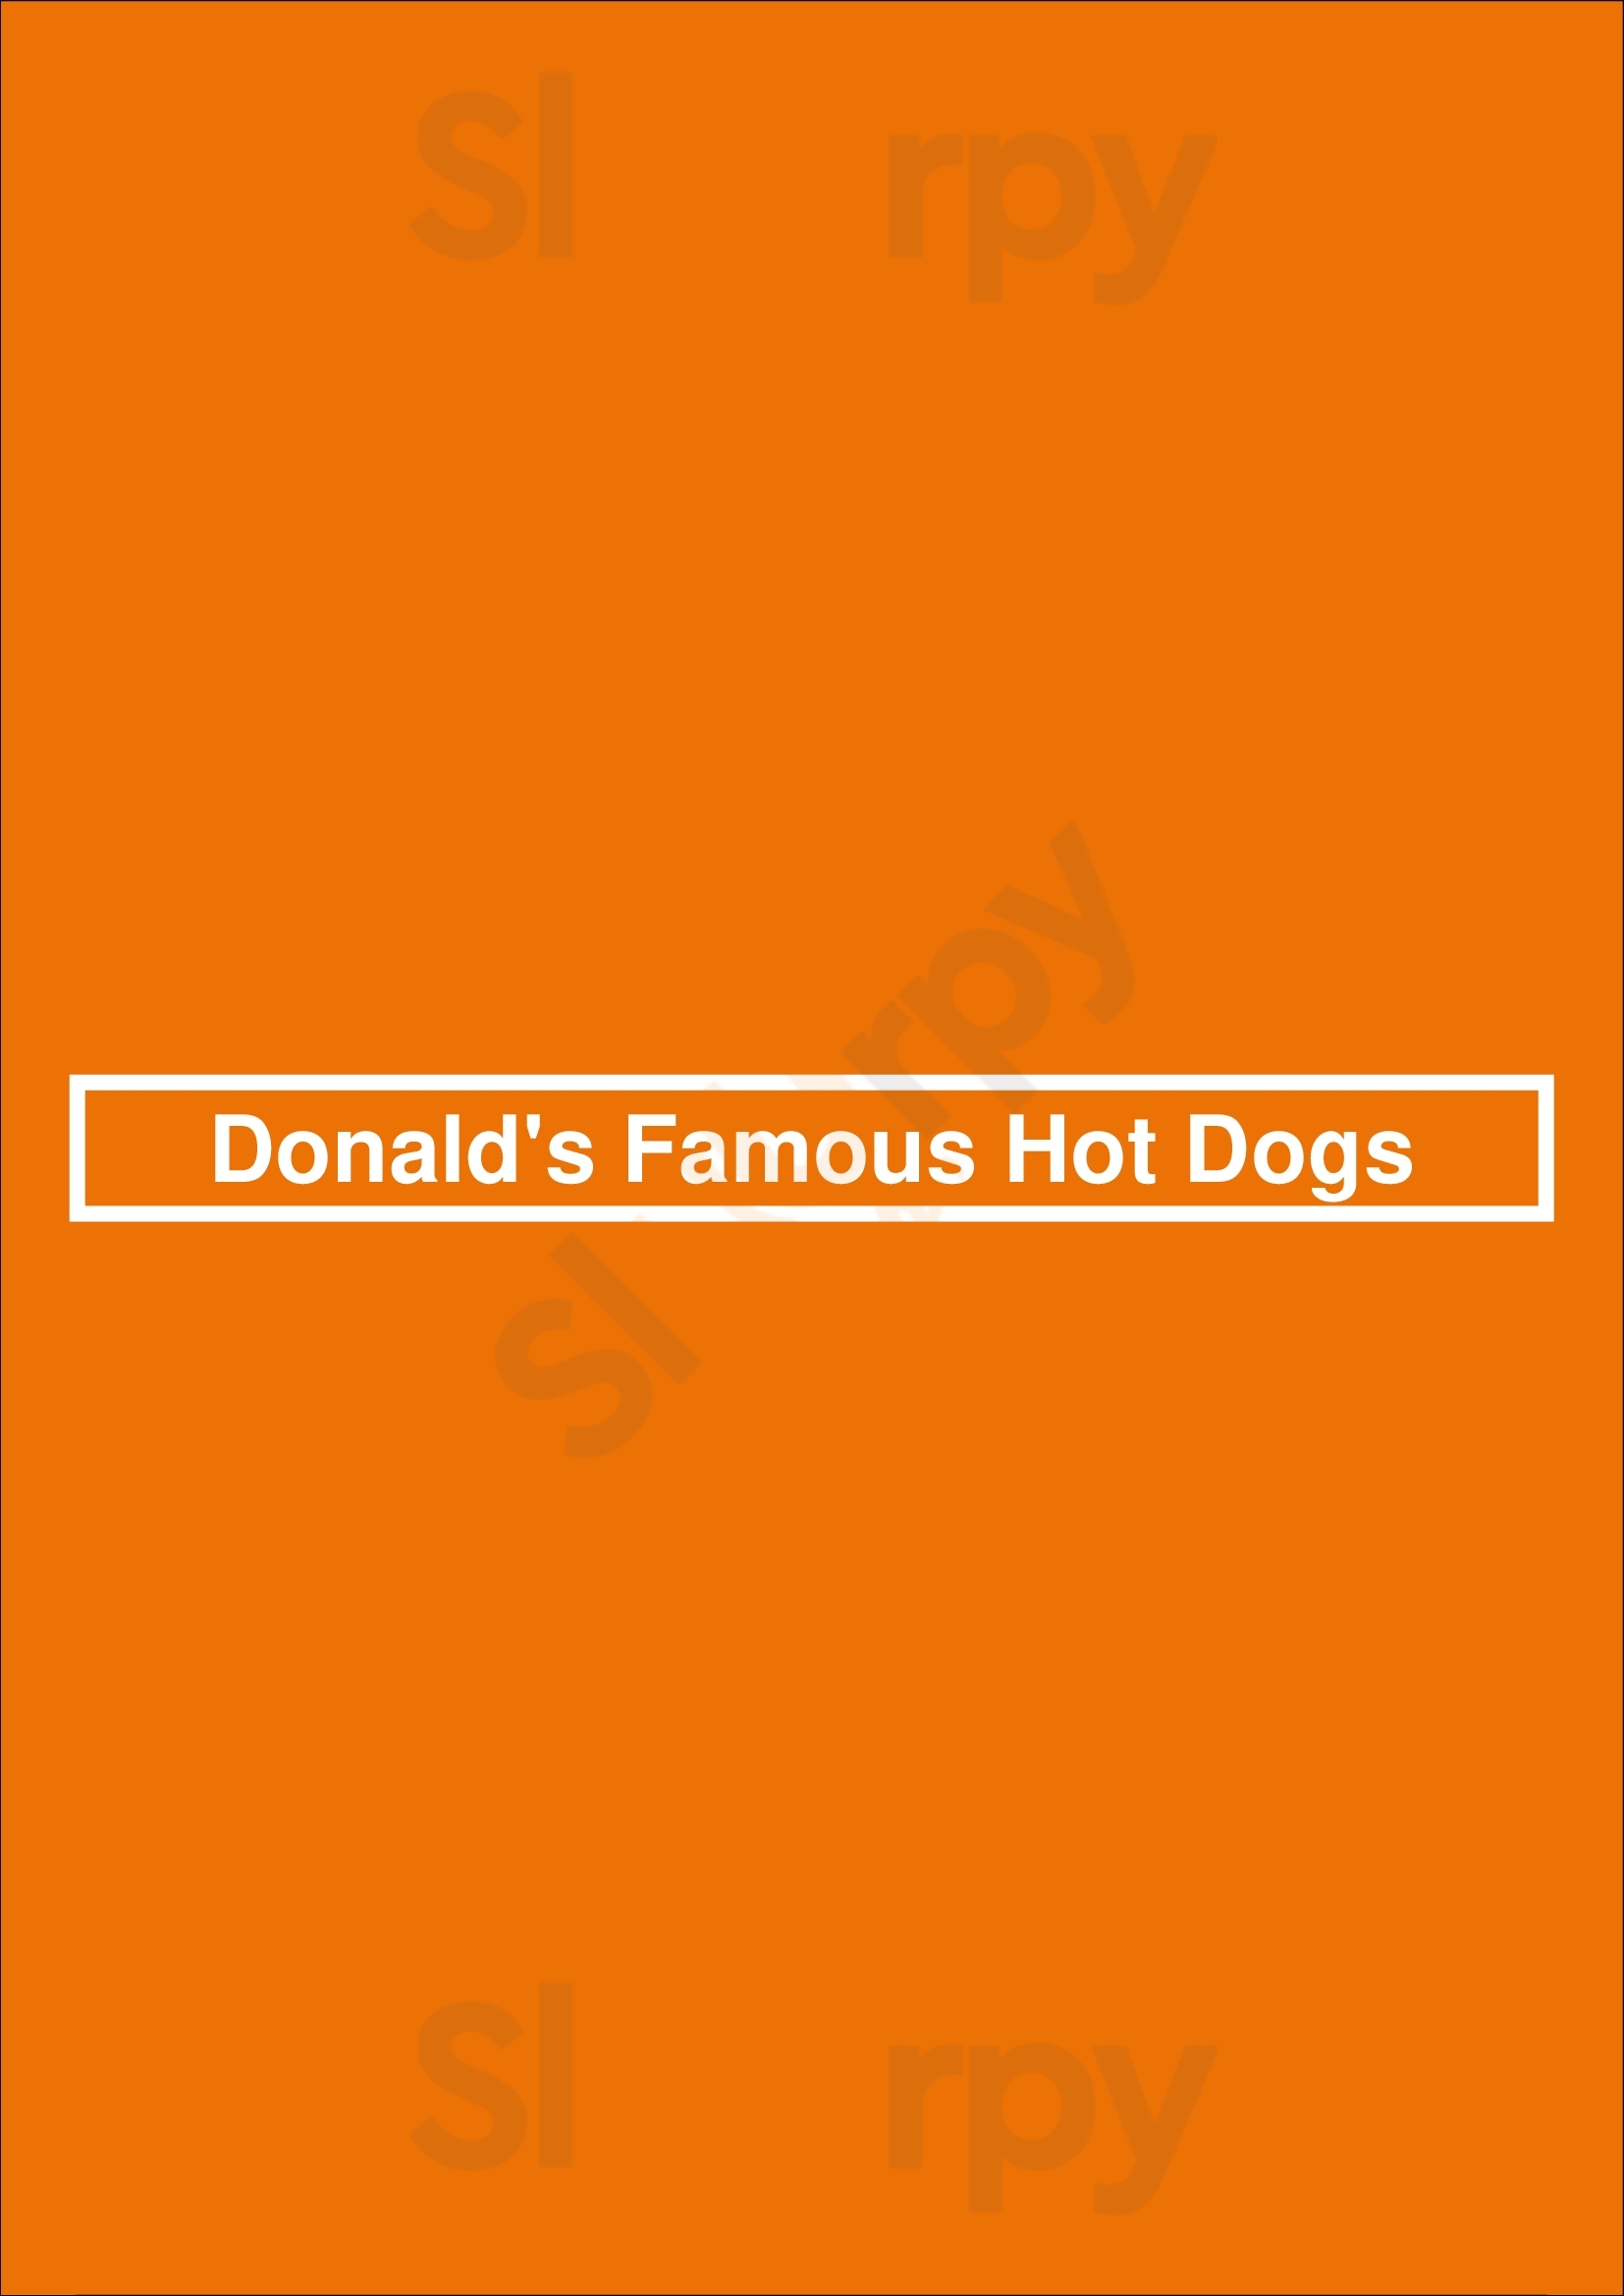 Donald's Famous Hot Dogs Chicago Menu - 1